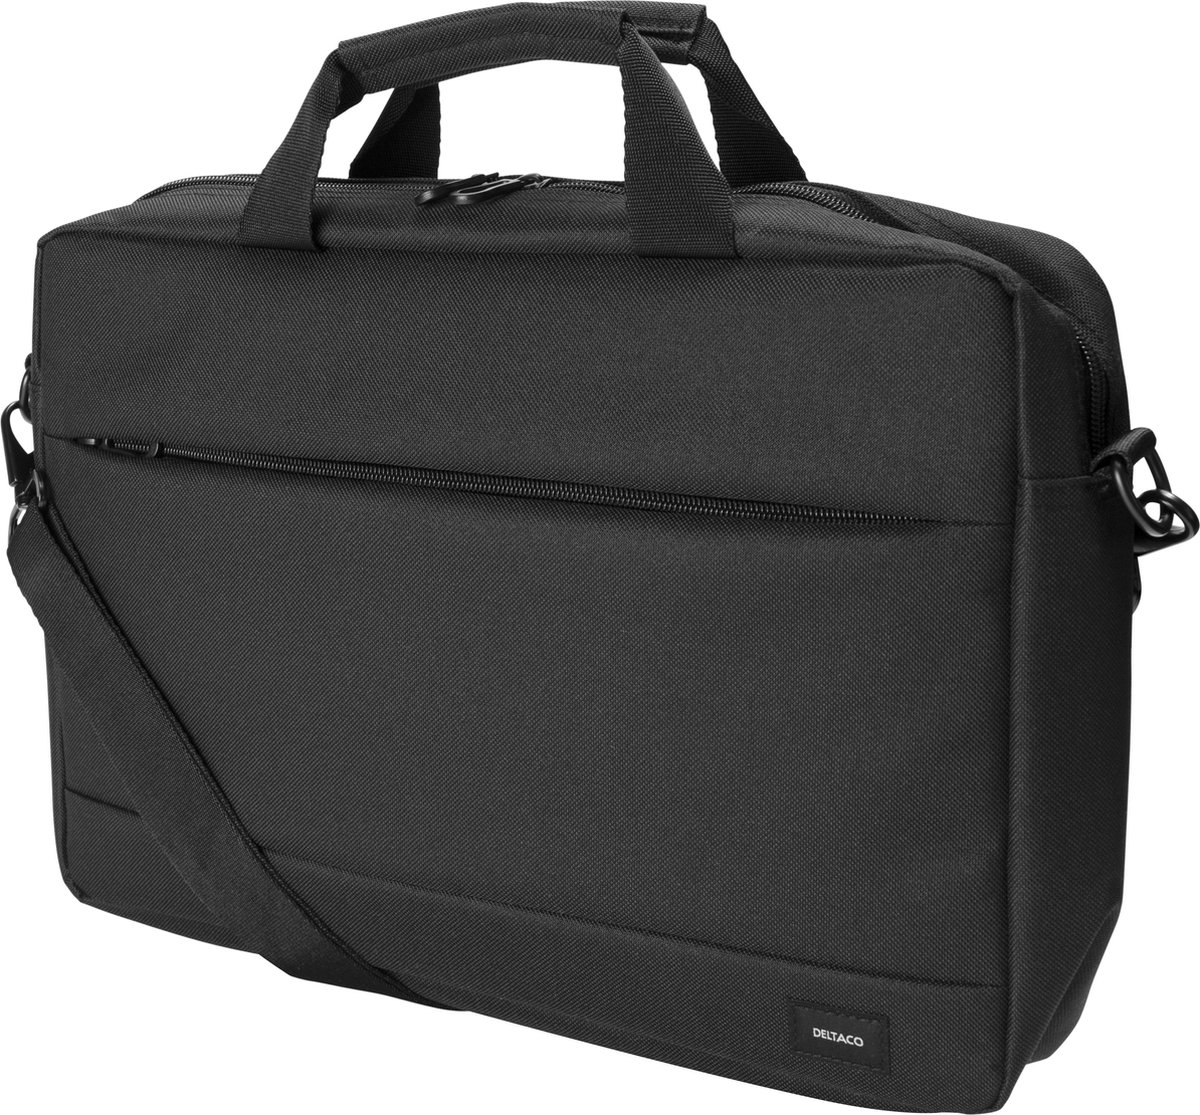 Deltaco Laptop Bag for Laptops up to 13-14 inch, patterned nylon - Black